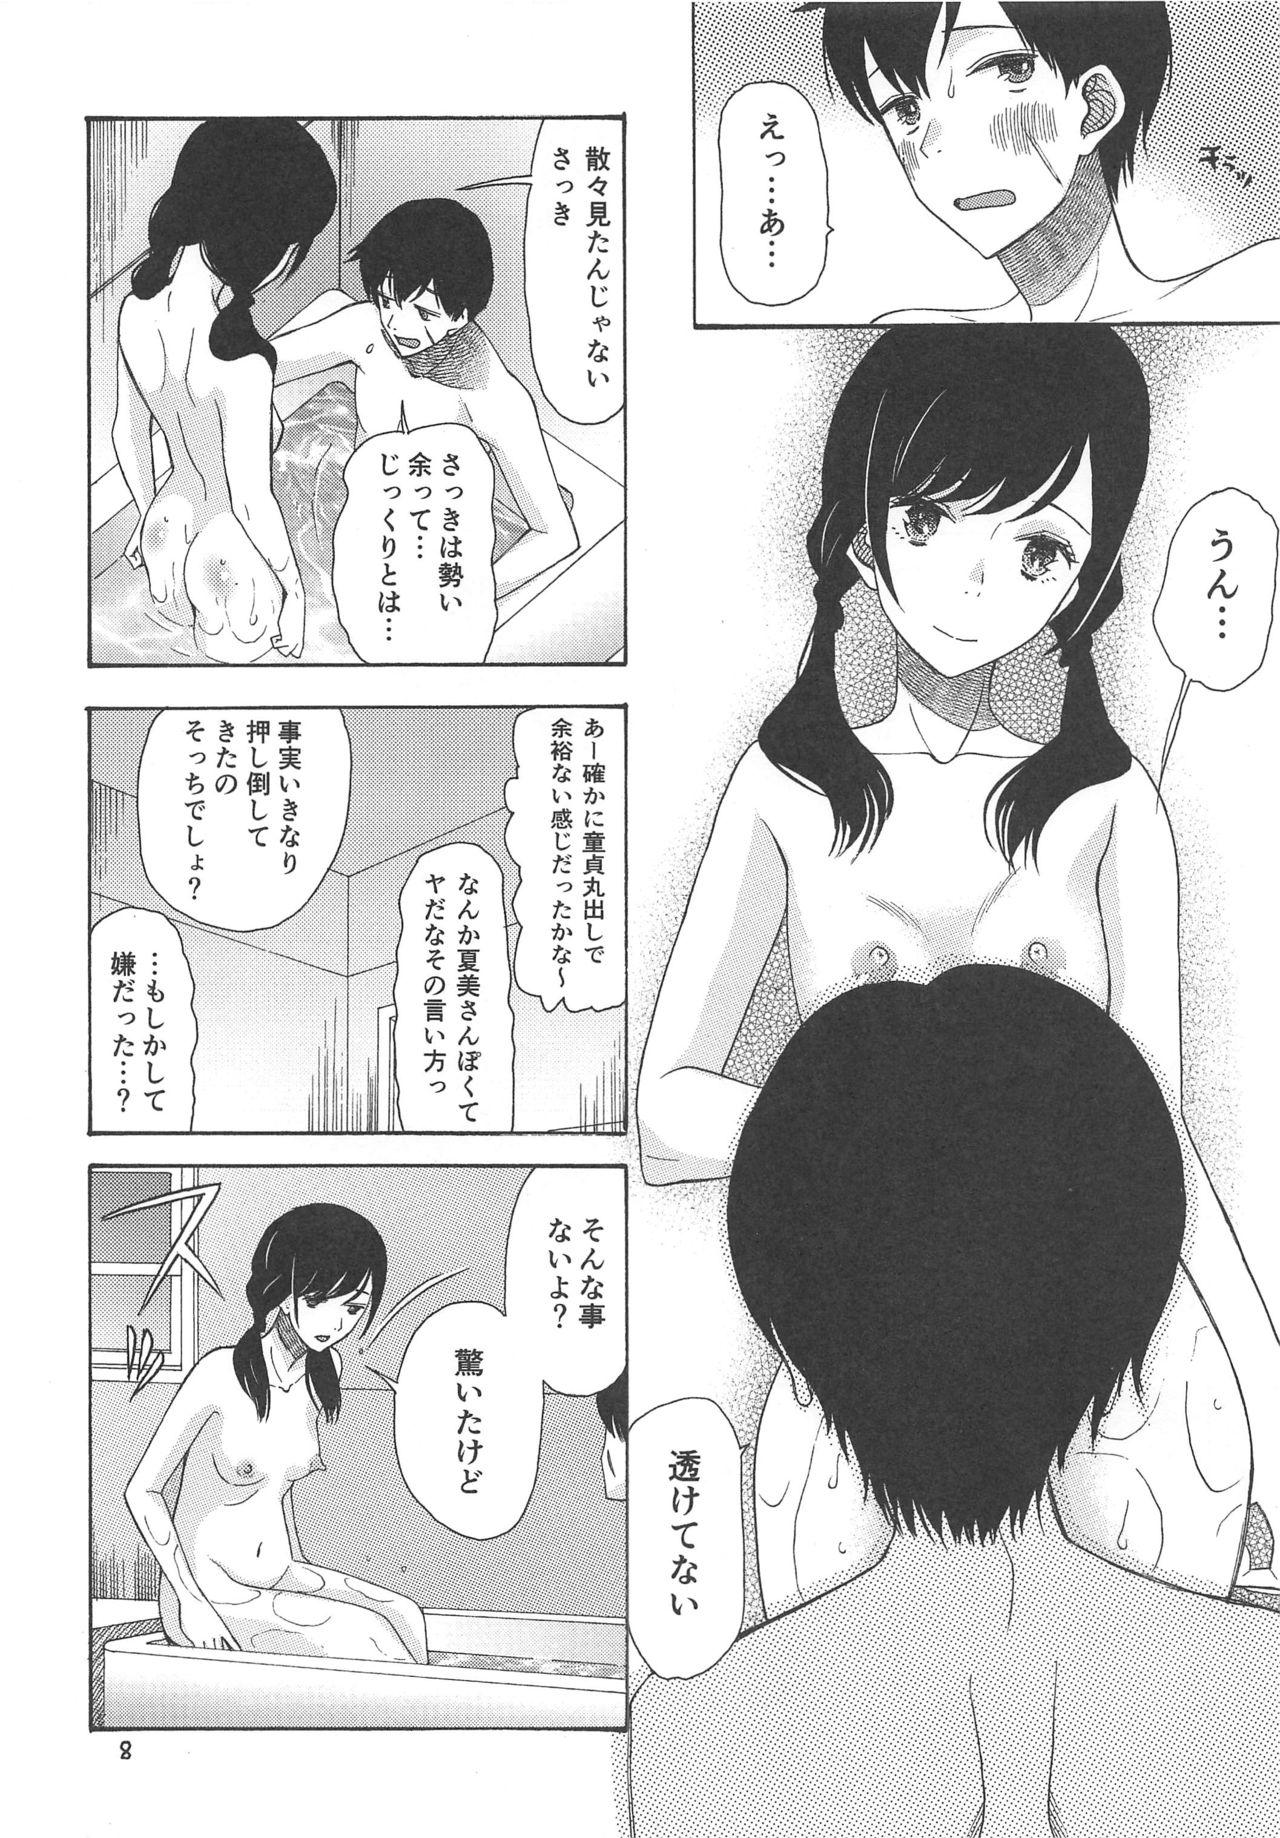 Hiddencam Haruumi Akiyama Kimi Egao - Tenki no ko Work - Page 7